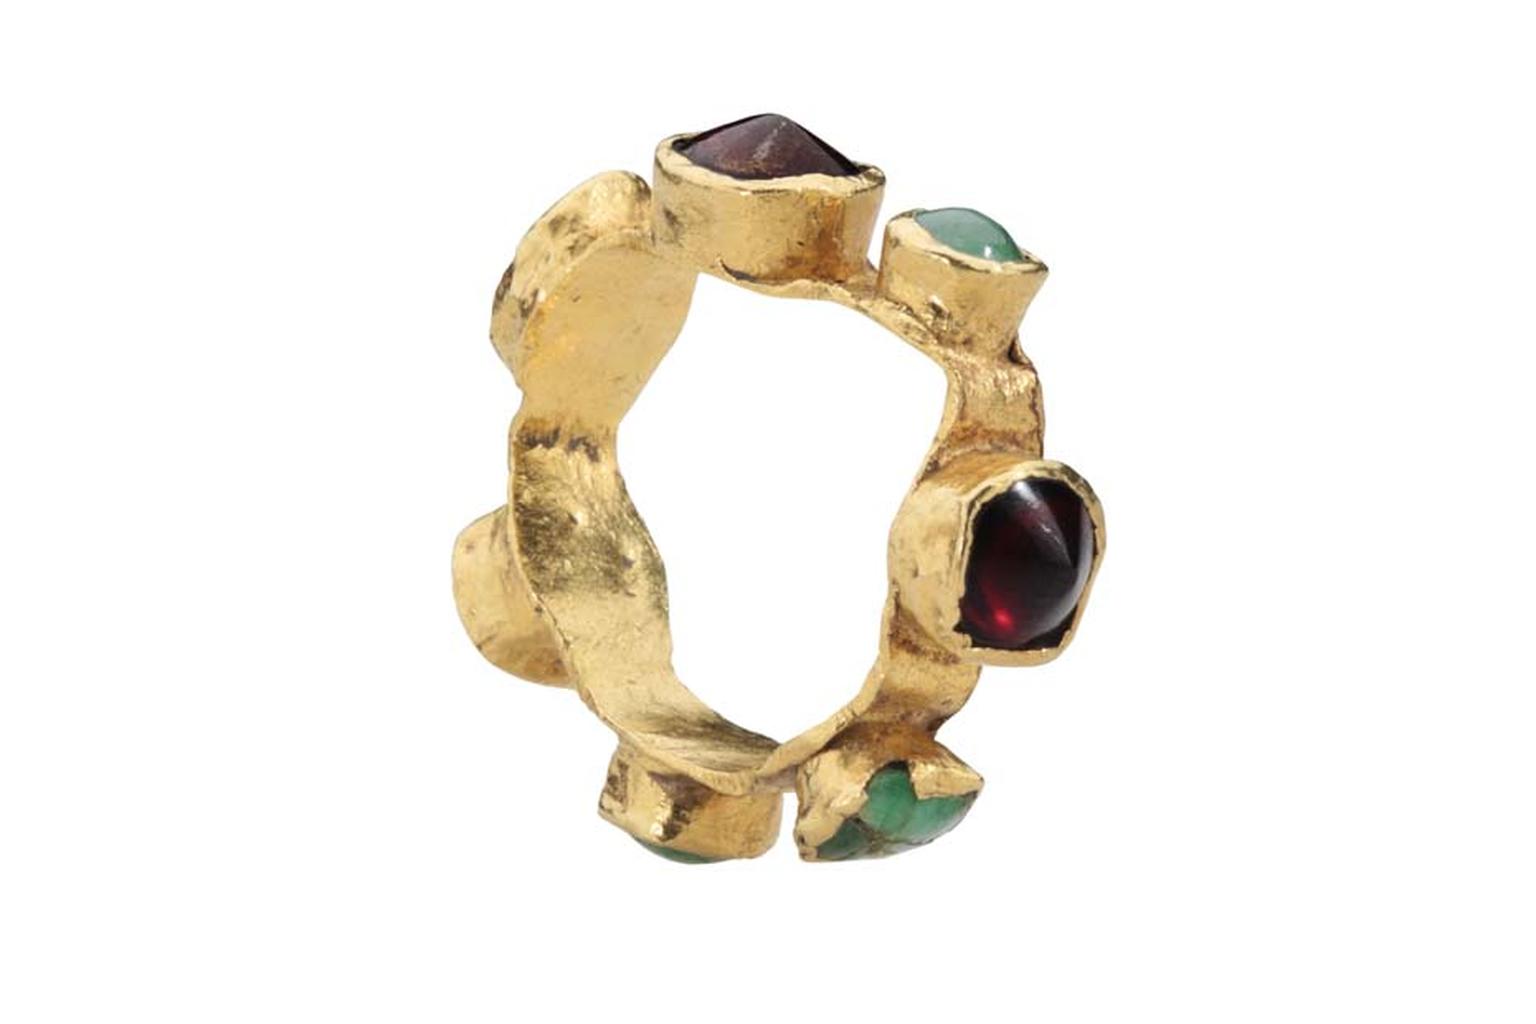 Les Enluminures gold Roman ring with cabochon garnets and jade.